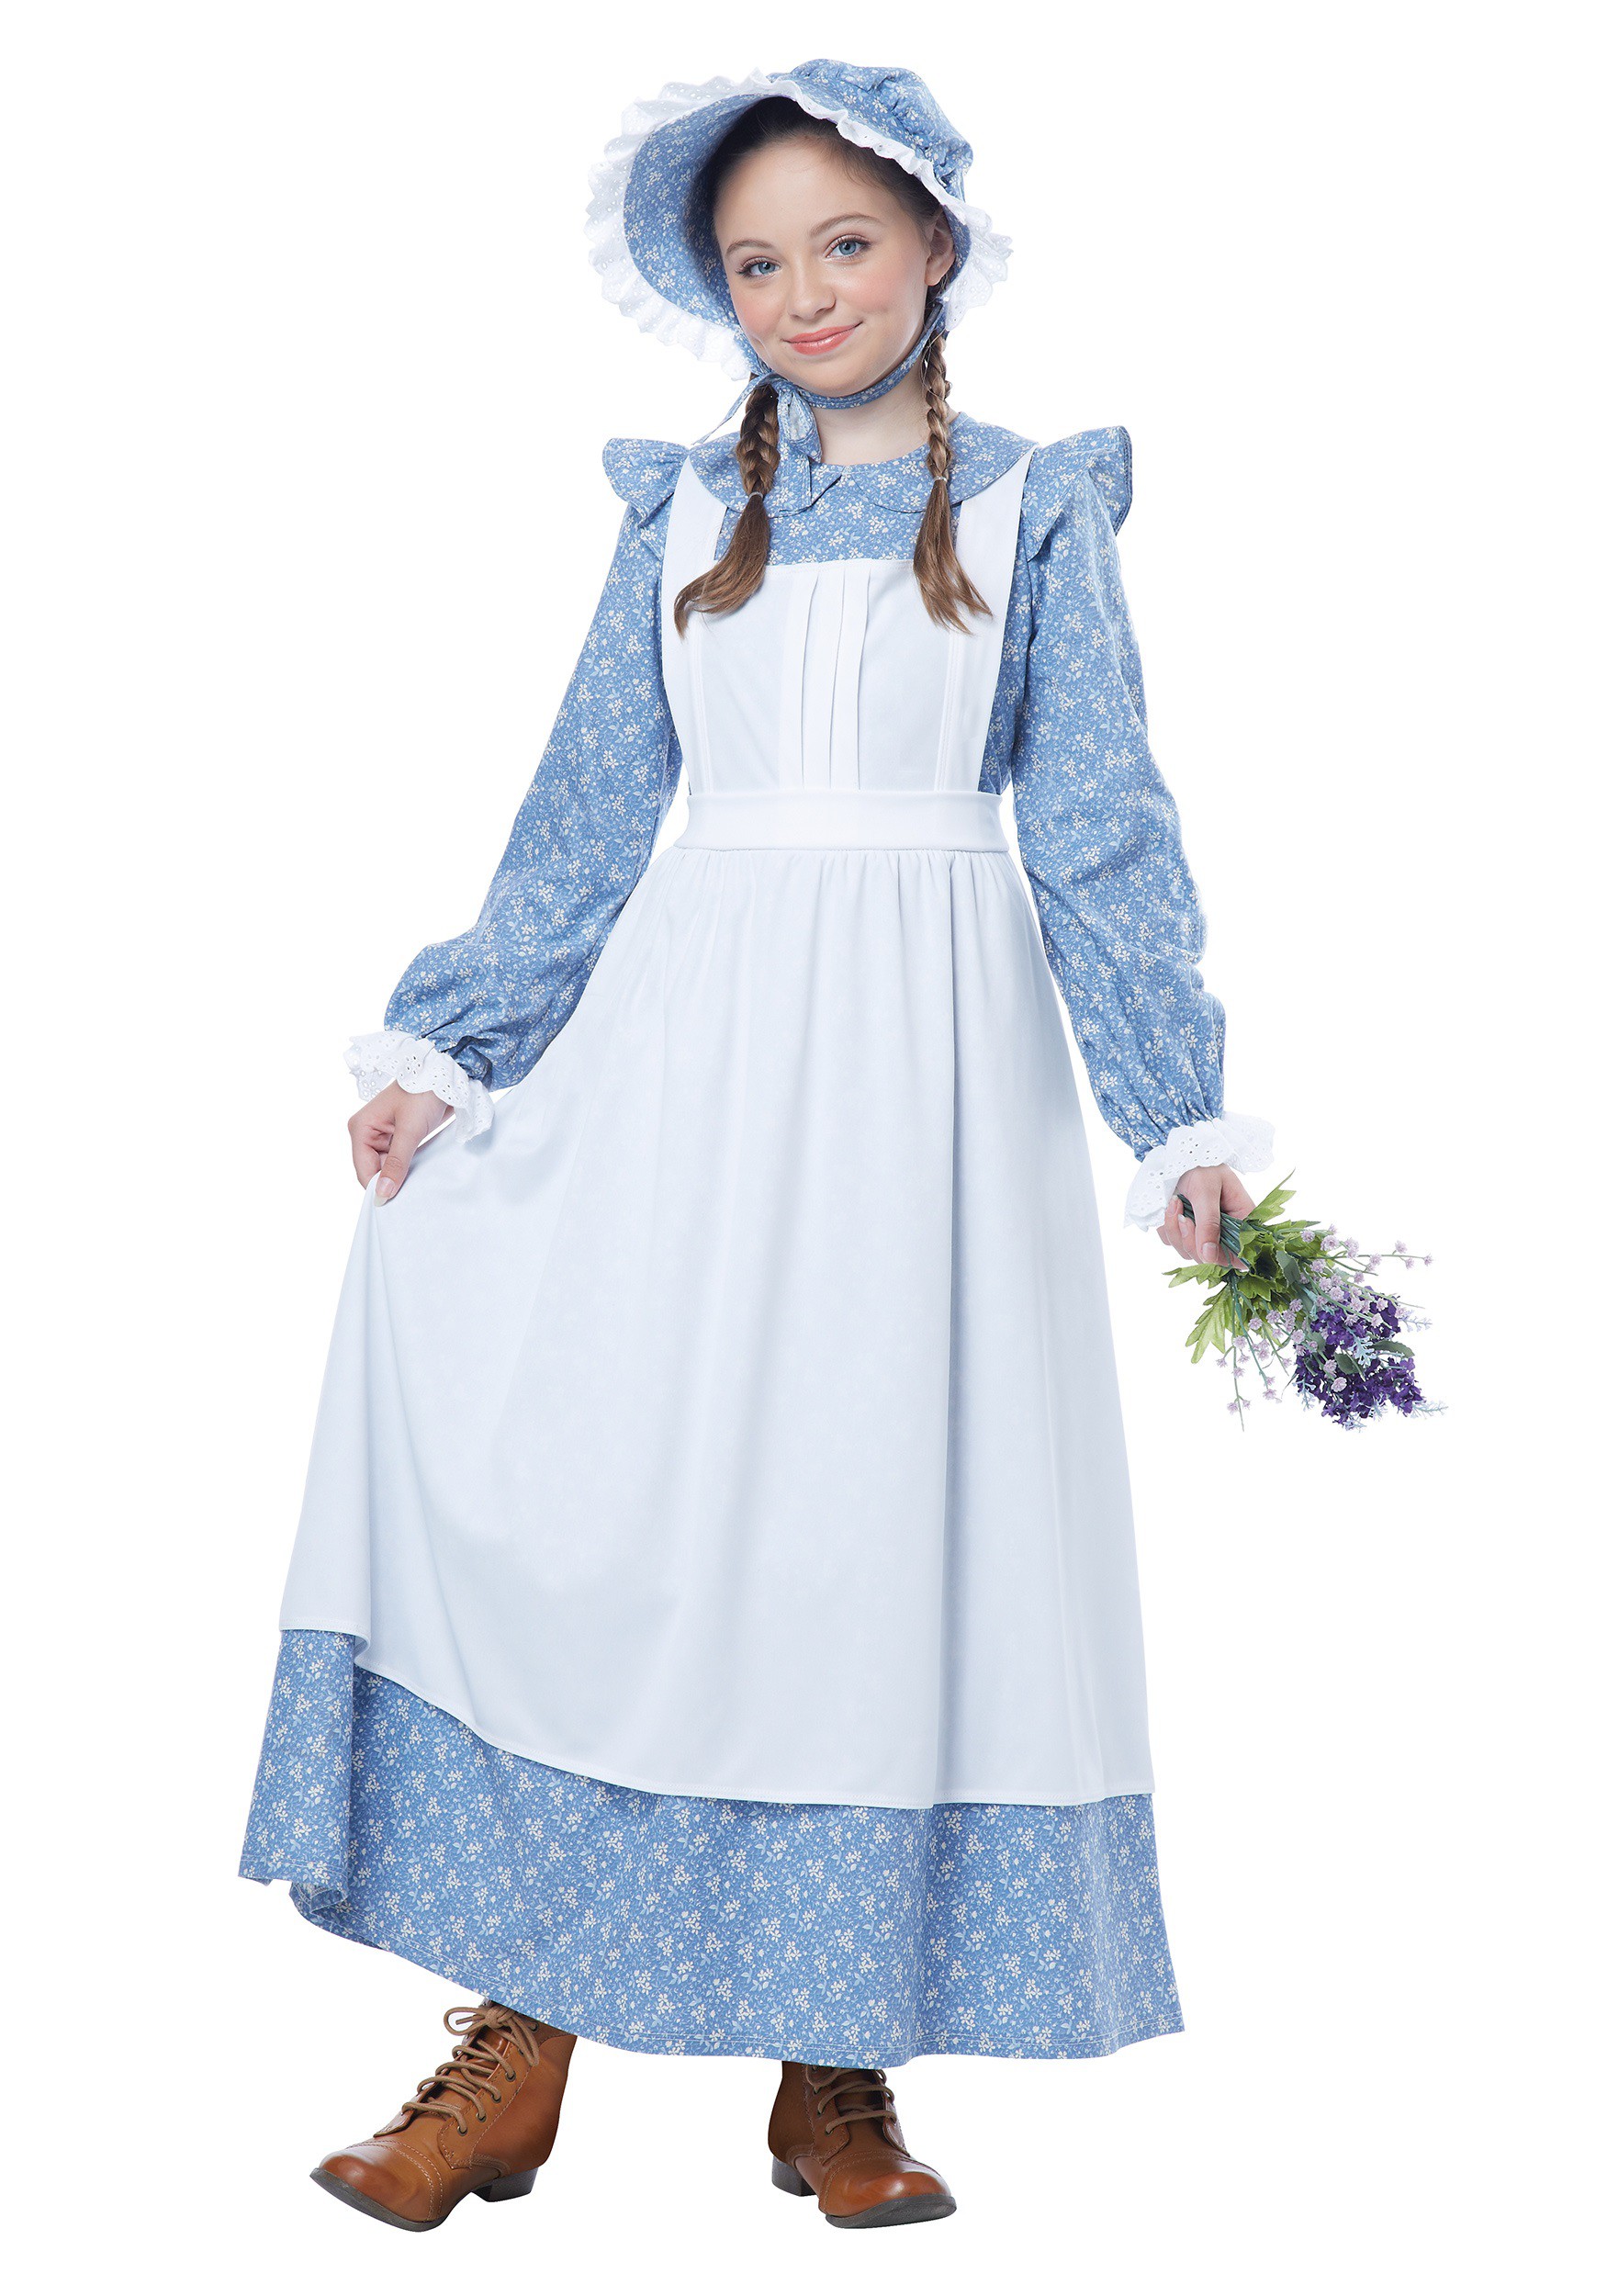 Child Pioneer Girl Costume , Historical Costume